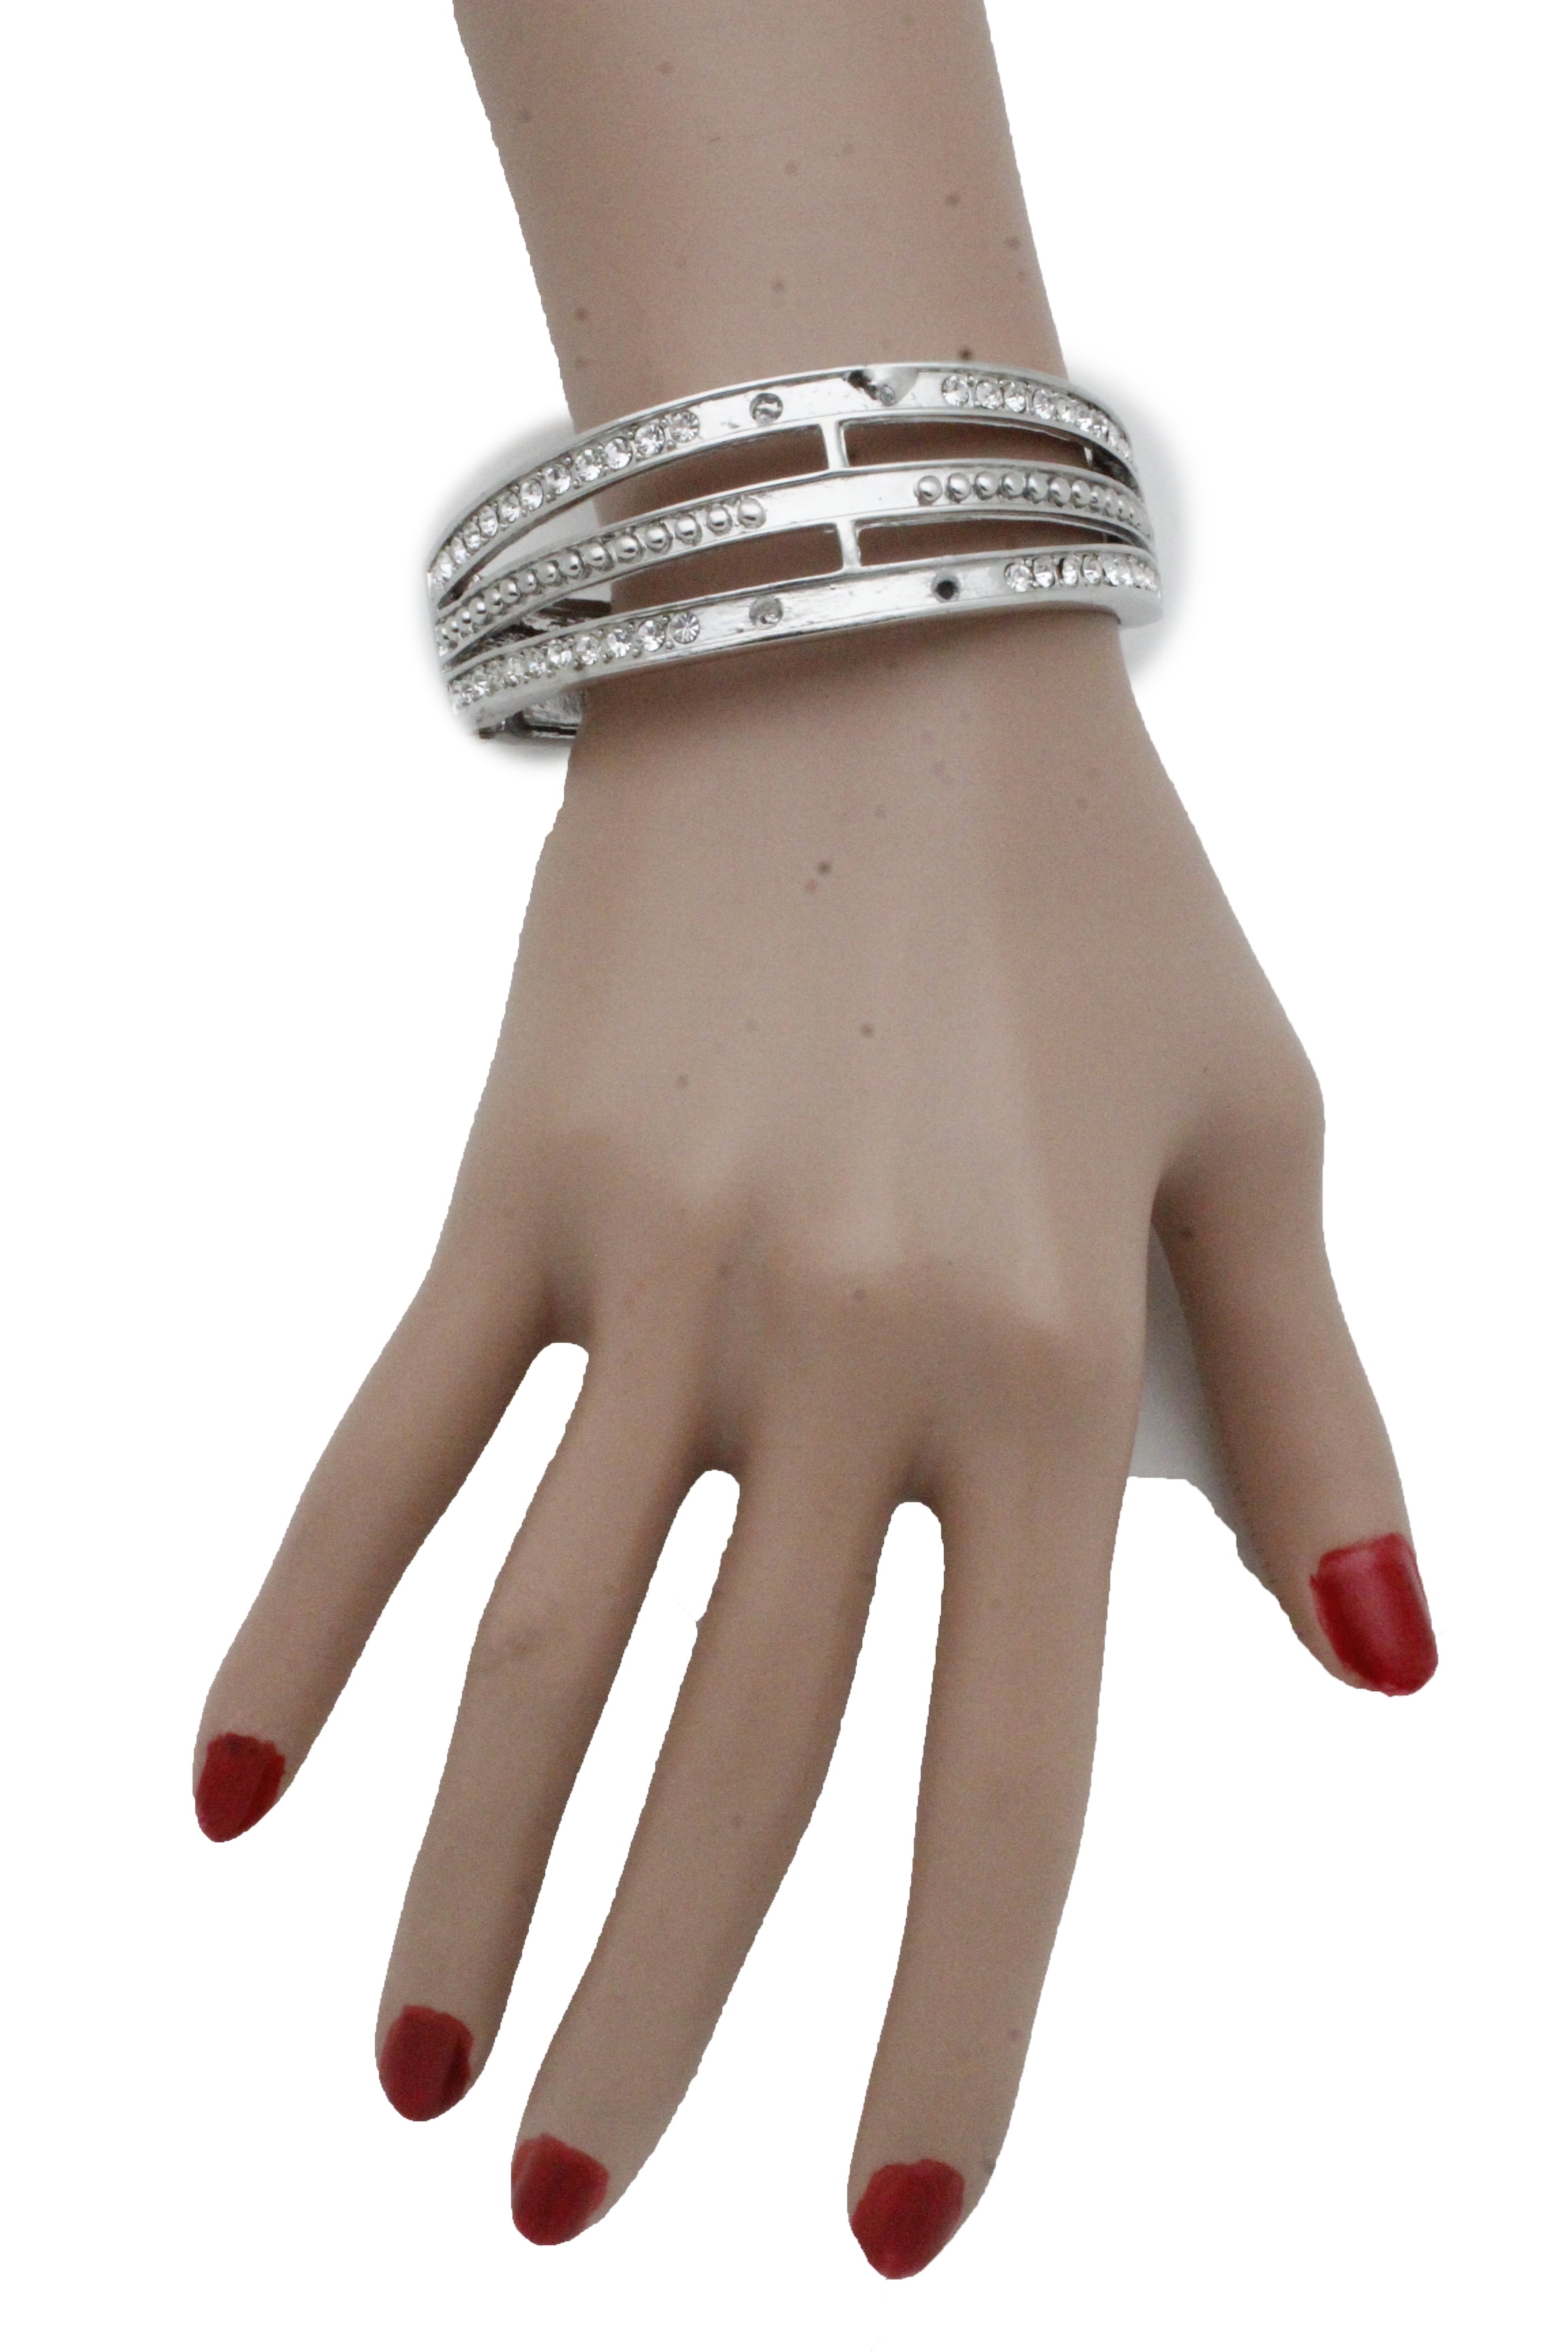 TFJ Women Wrist Bracelet Gold Metal Hand Chain Fashion Jewelry Classic Casual Slave Ring Basic